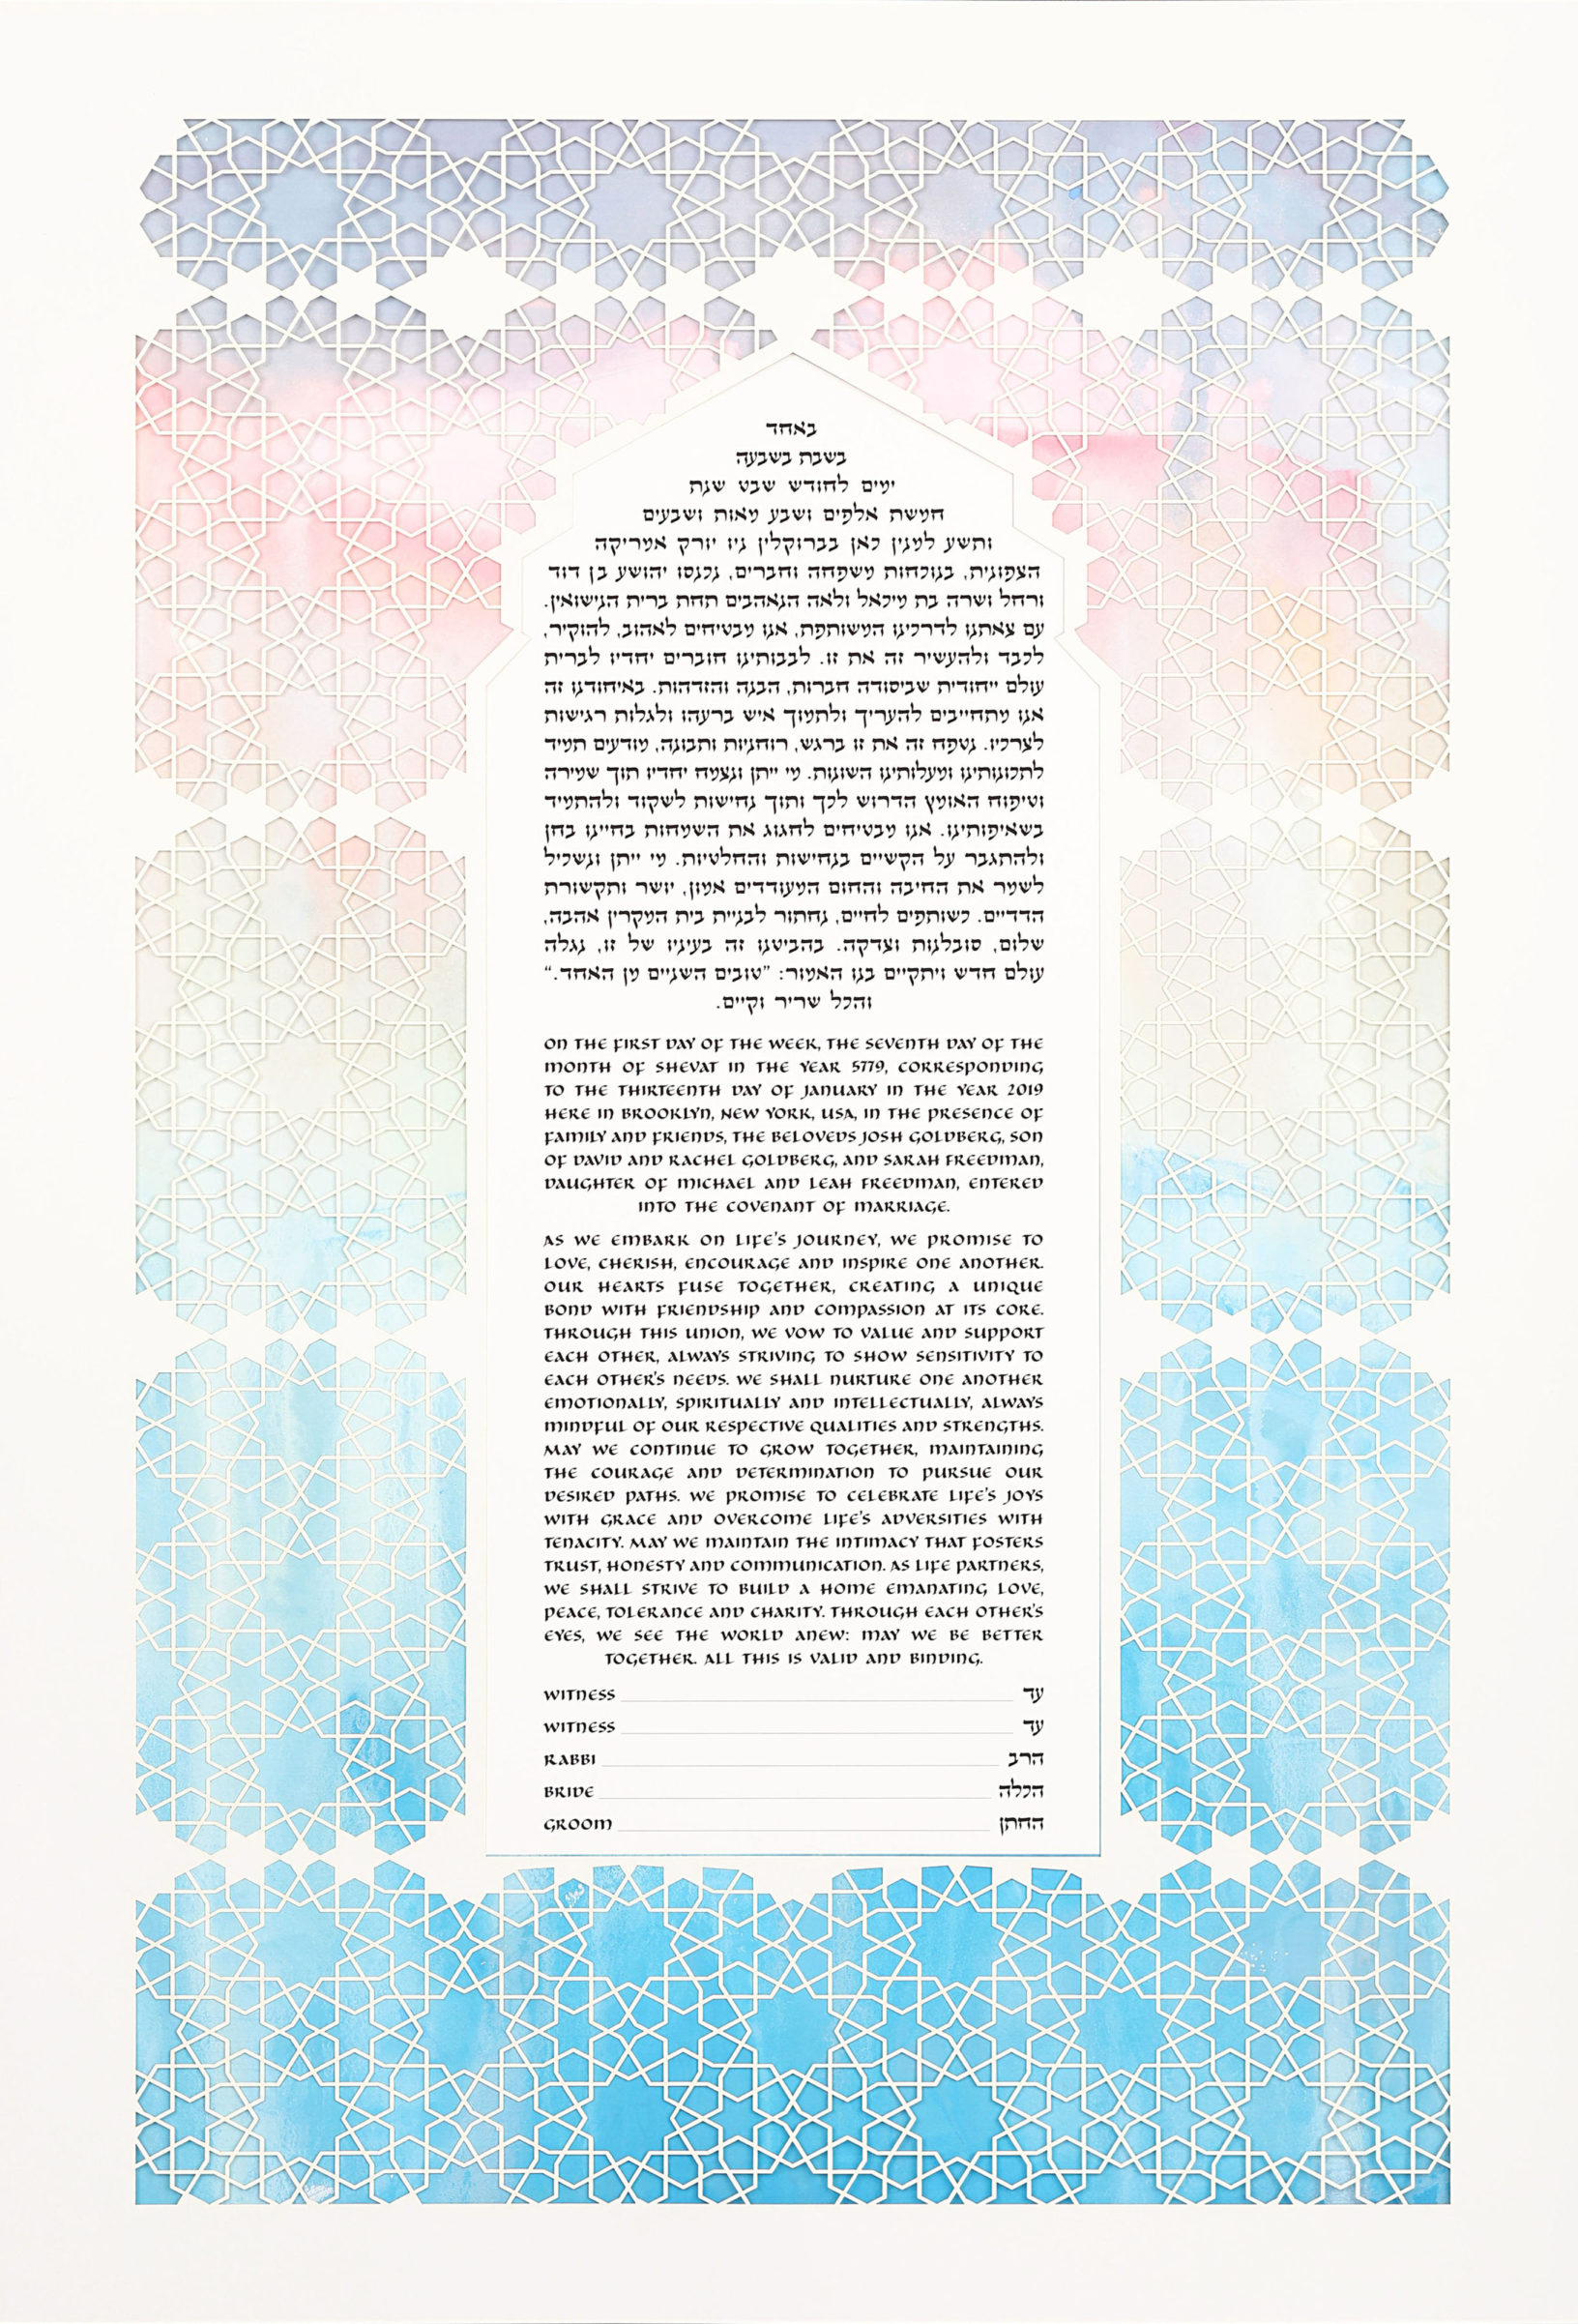 Ruth Becker Papercut Persian Papercut Pastel Ketubah Designs